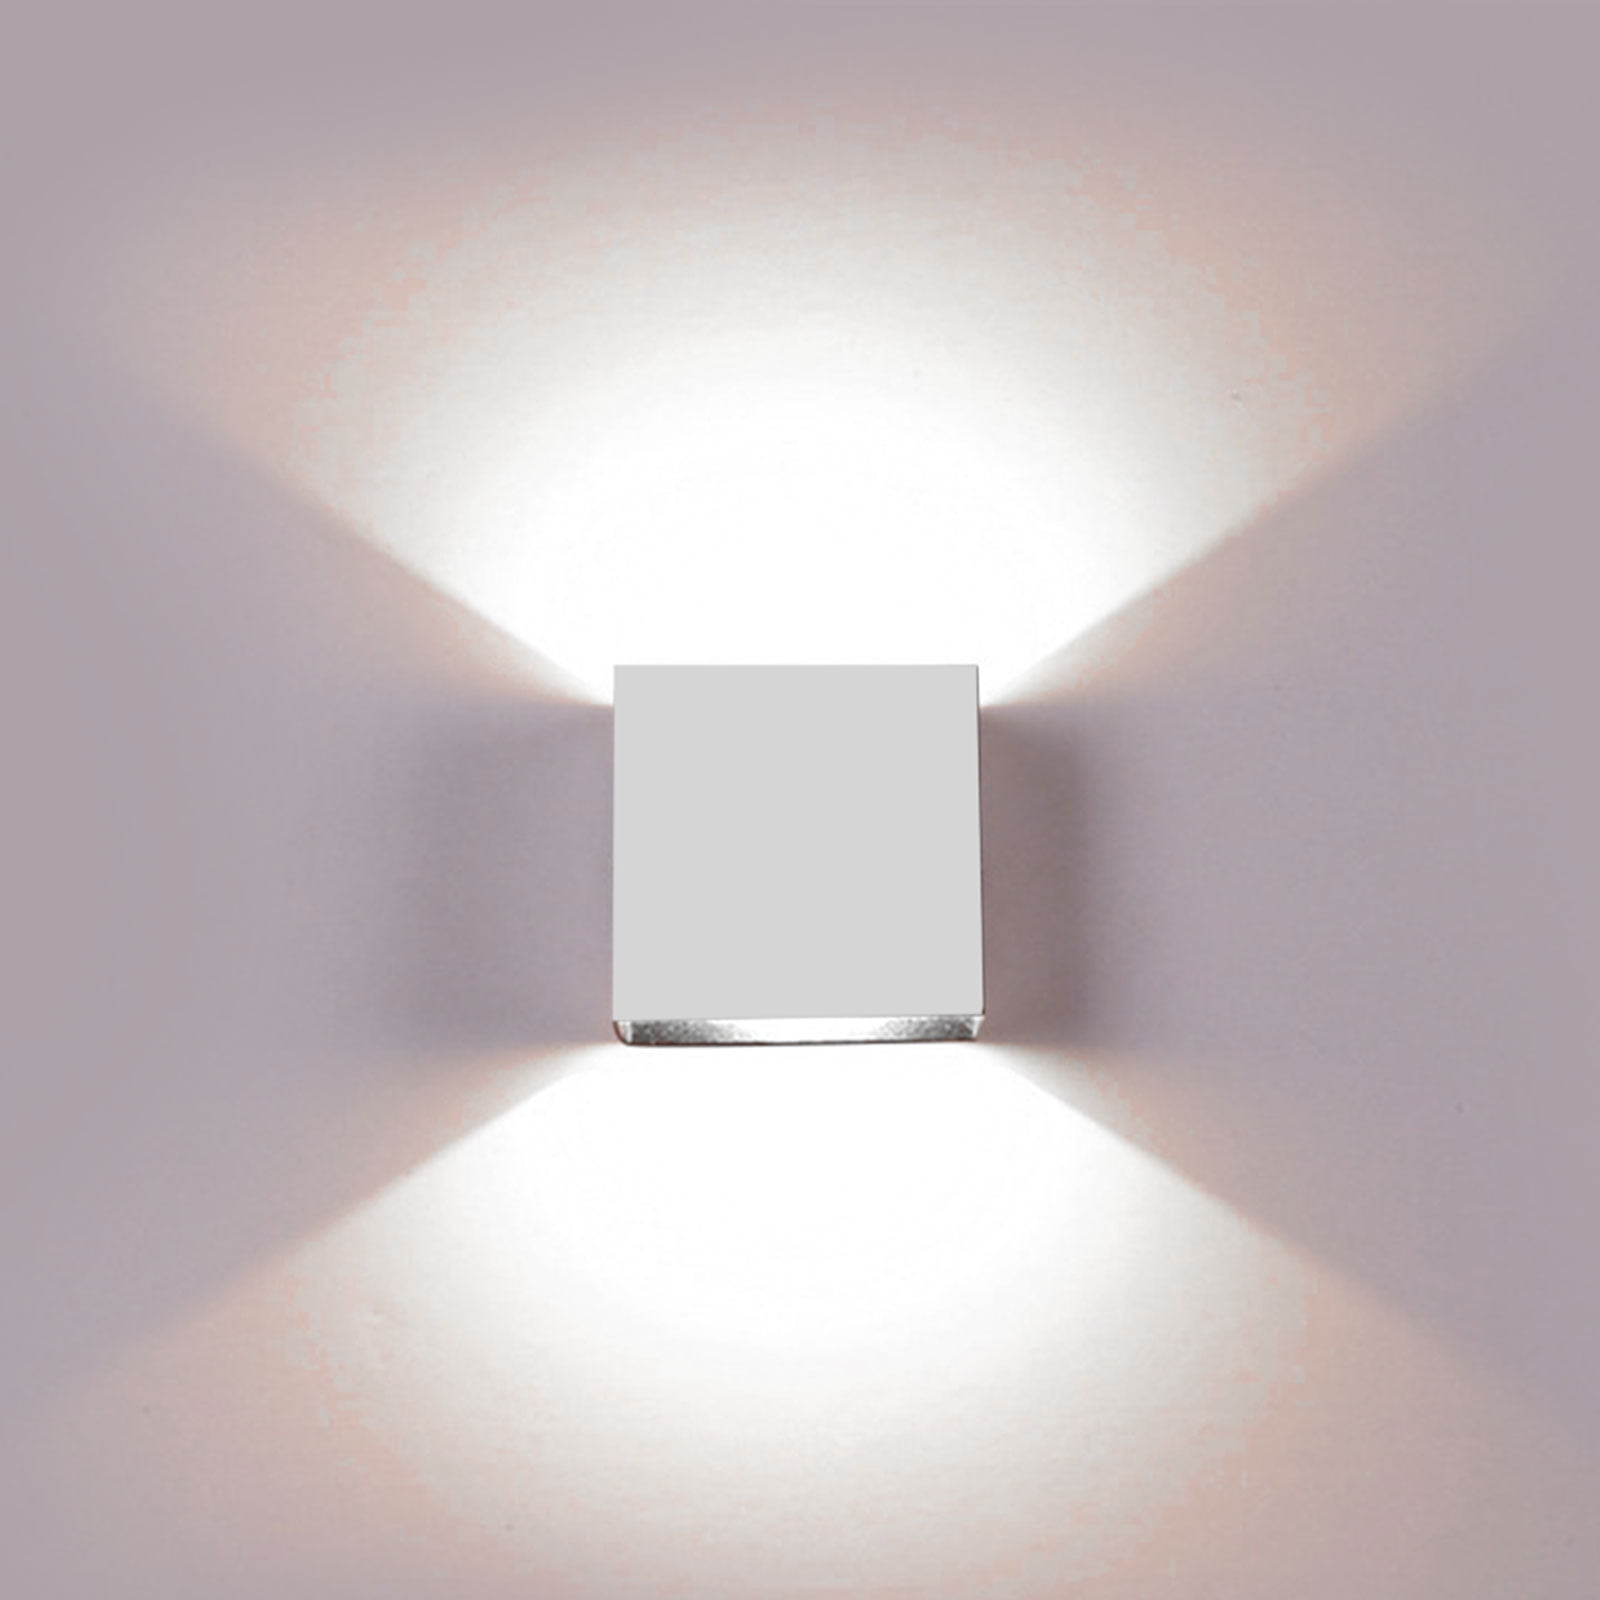 Wall-Lamp Modern Minimalist Indoor LED Light Wall Sconce Fixture Home/Bedroom B 